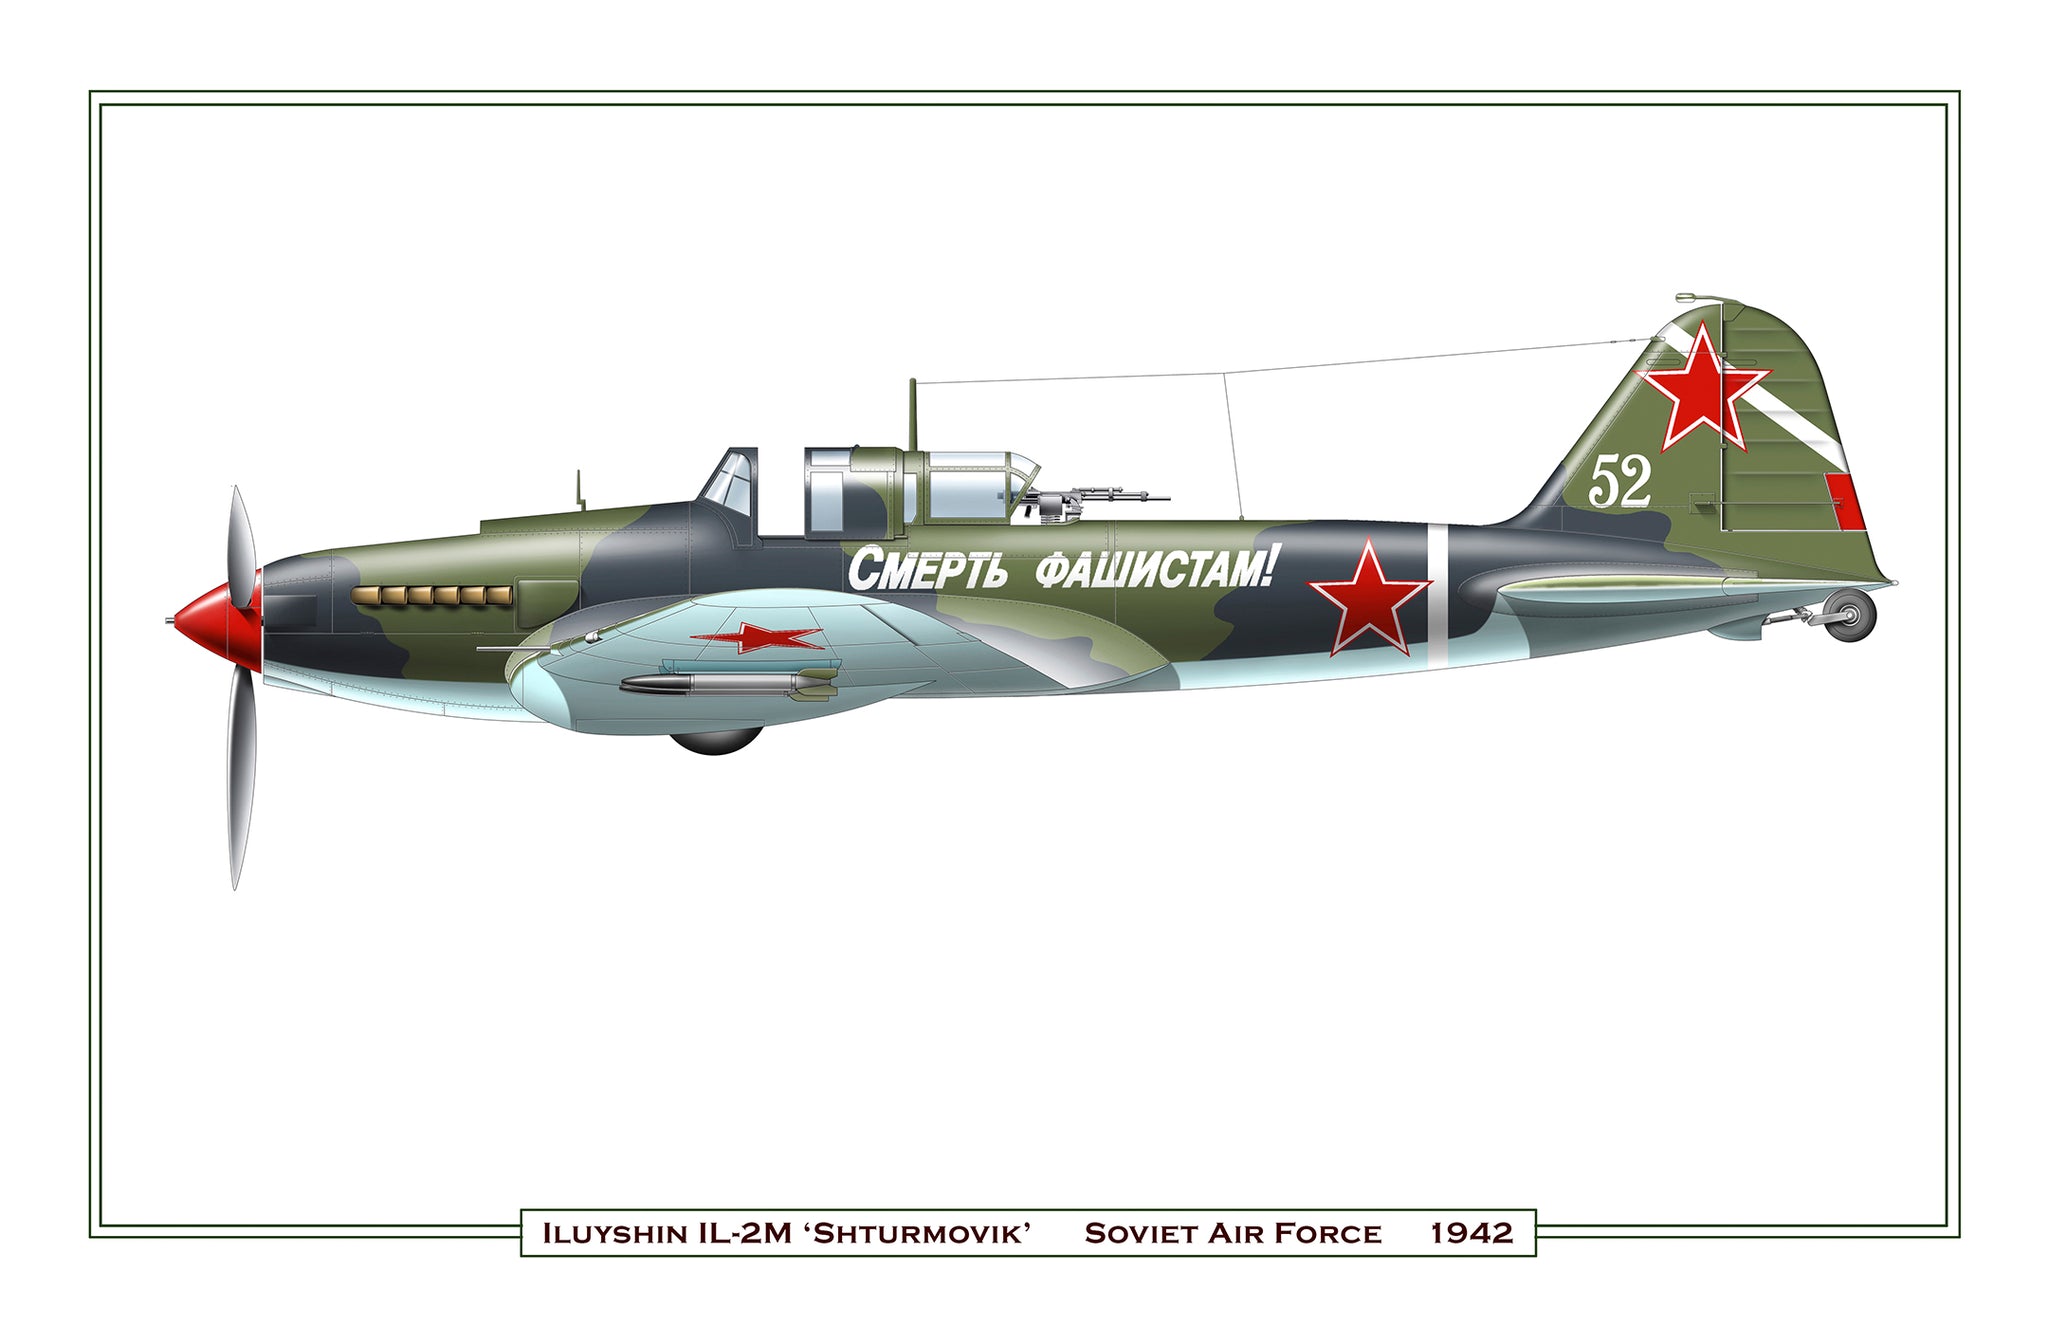 Iluyshin IL-2M “Shturmovik”